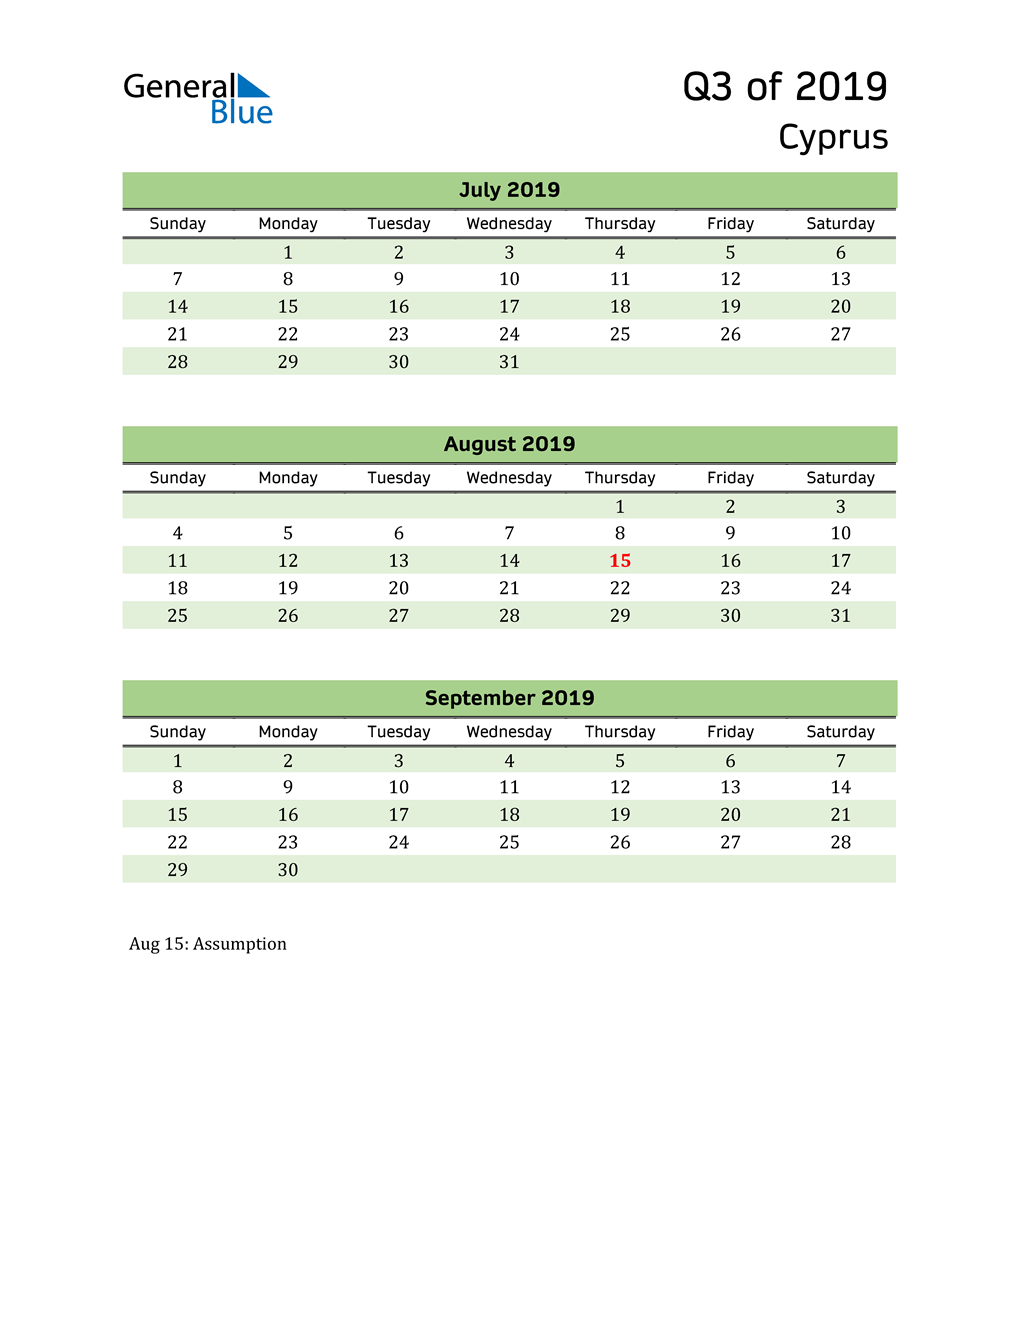  Quarterly Calendar 2019 with Cyprus Holidays 